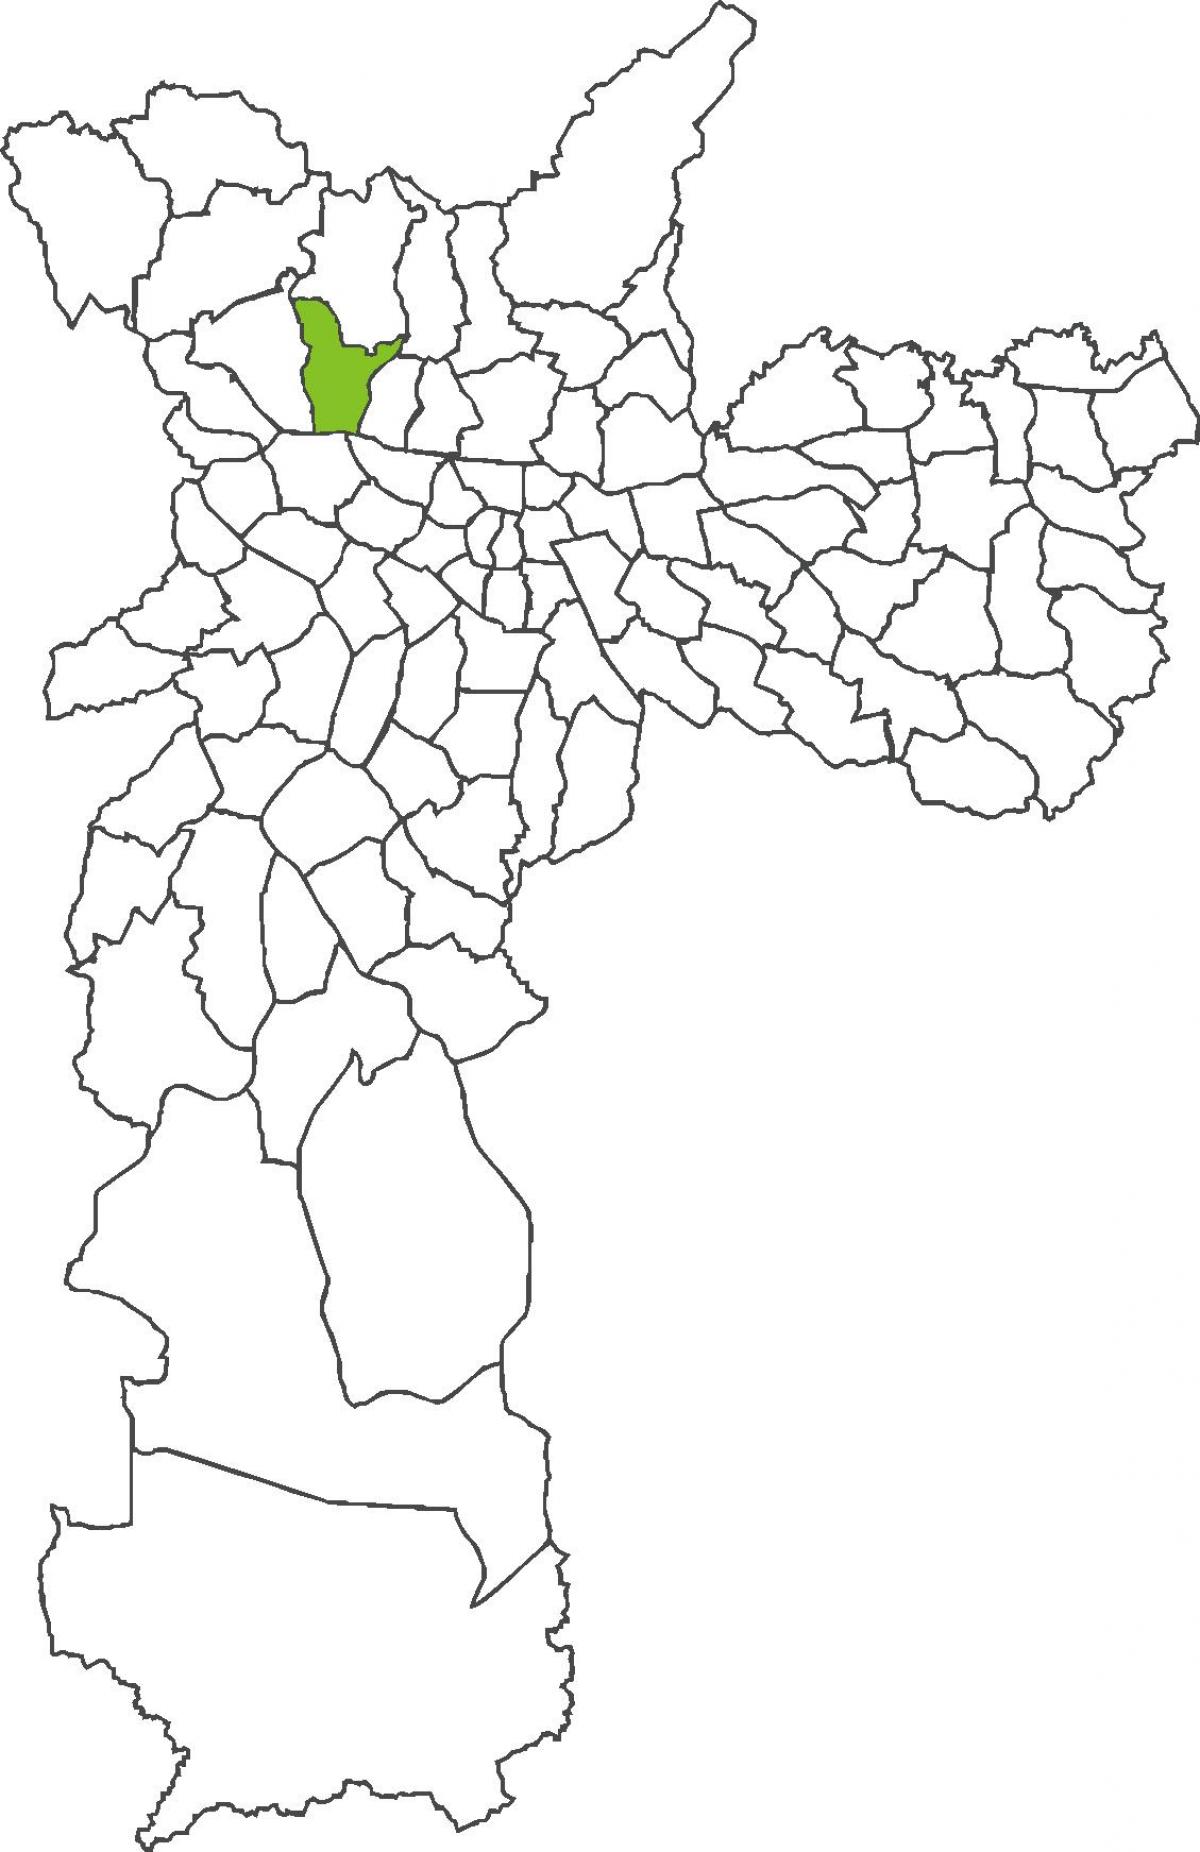 Kaart van Freguesia doen Ó distrik